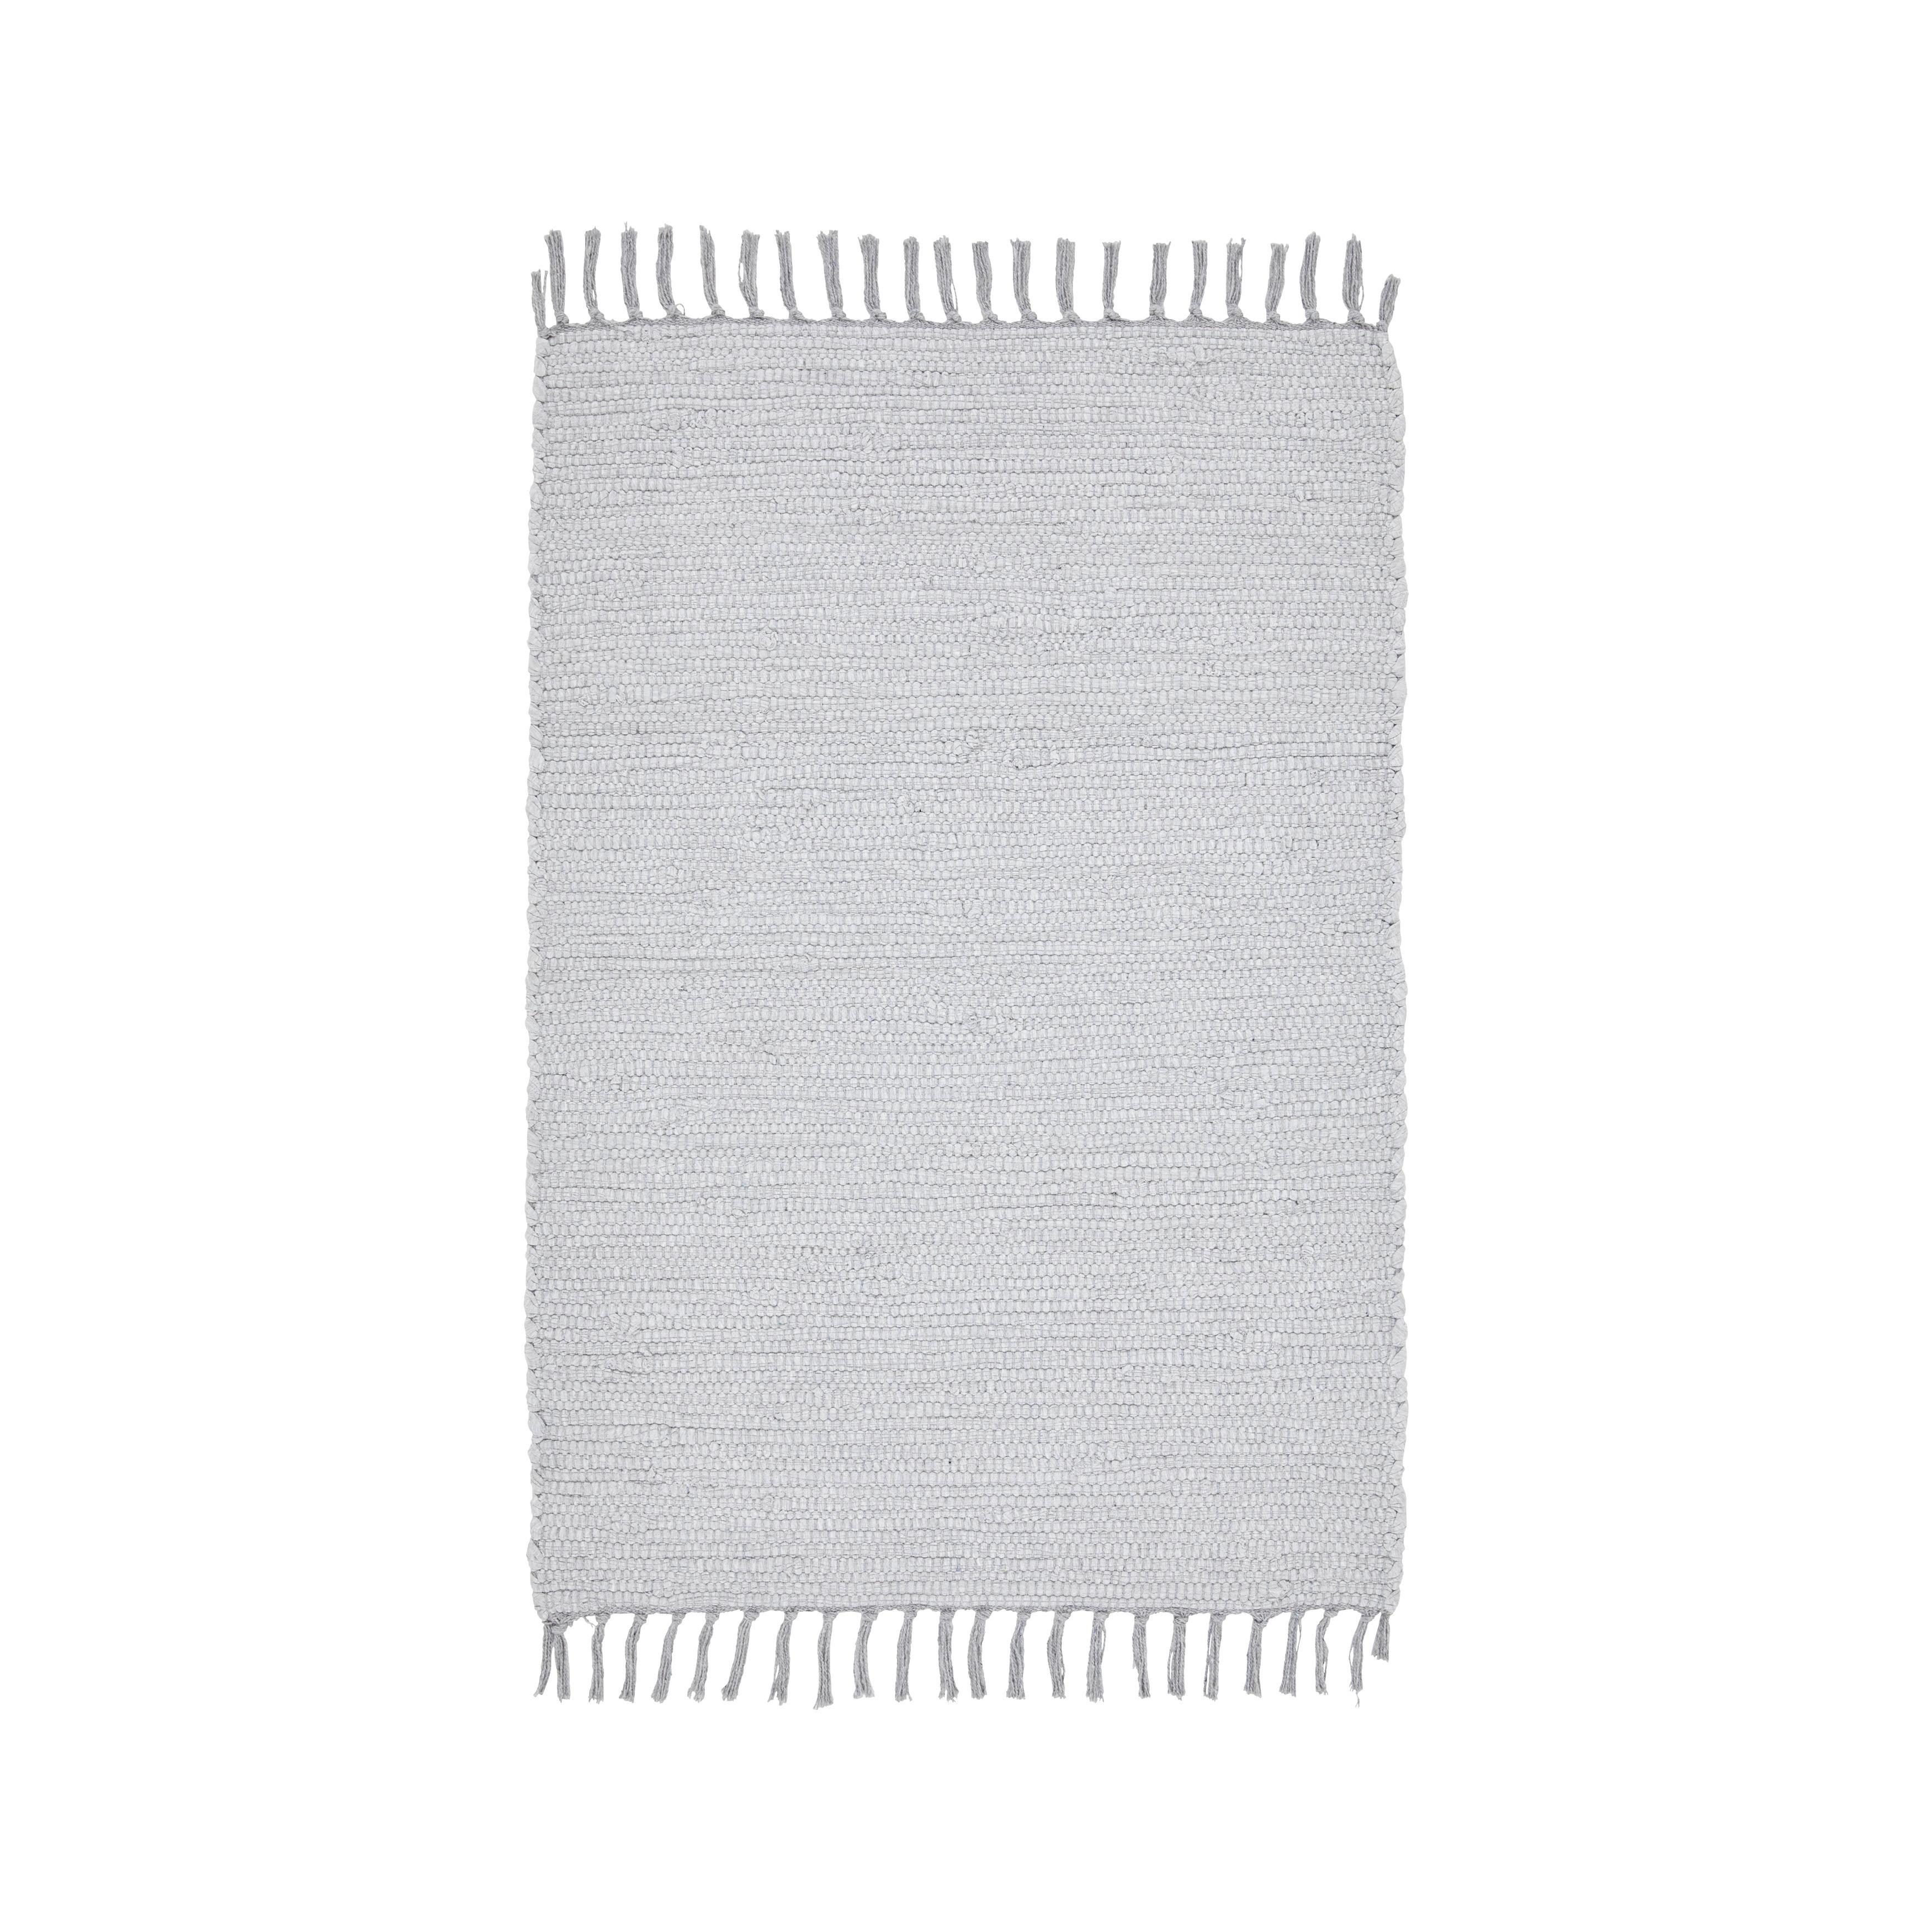 Hadrový Koberec Julia 2, Š/d: 70x130cm - šedá/barvy stříbra, Romantický / Rustikální, textil (70/130cm) - Modern Living